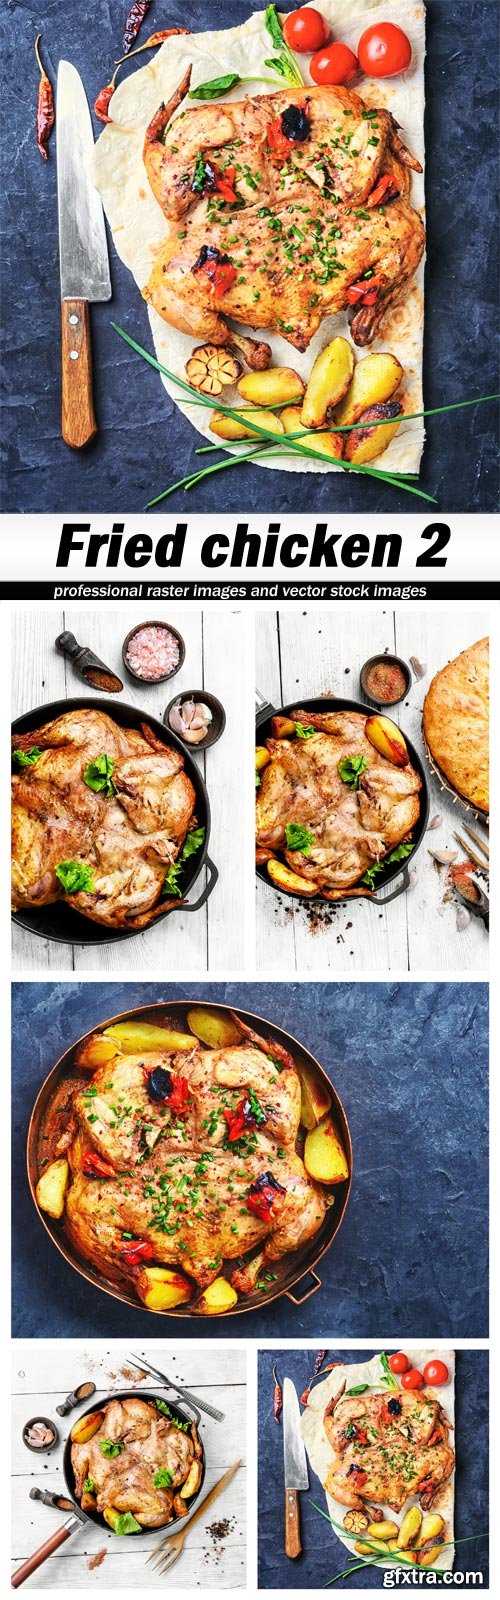 Fried chicken 2 - 5 UHQ JPEG